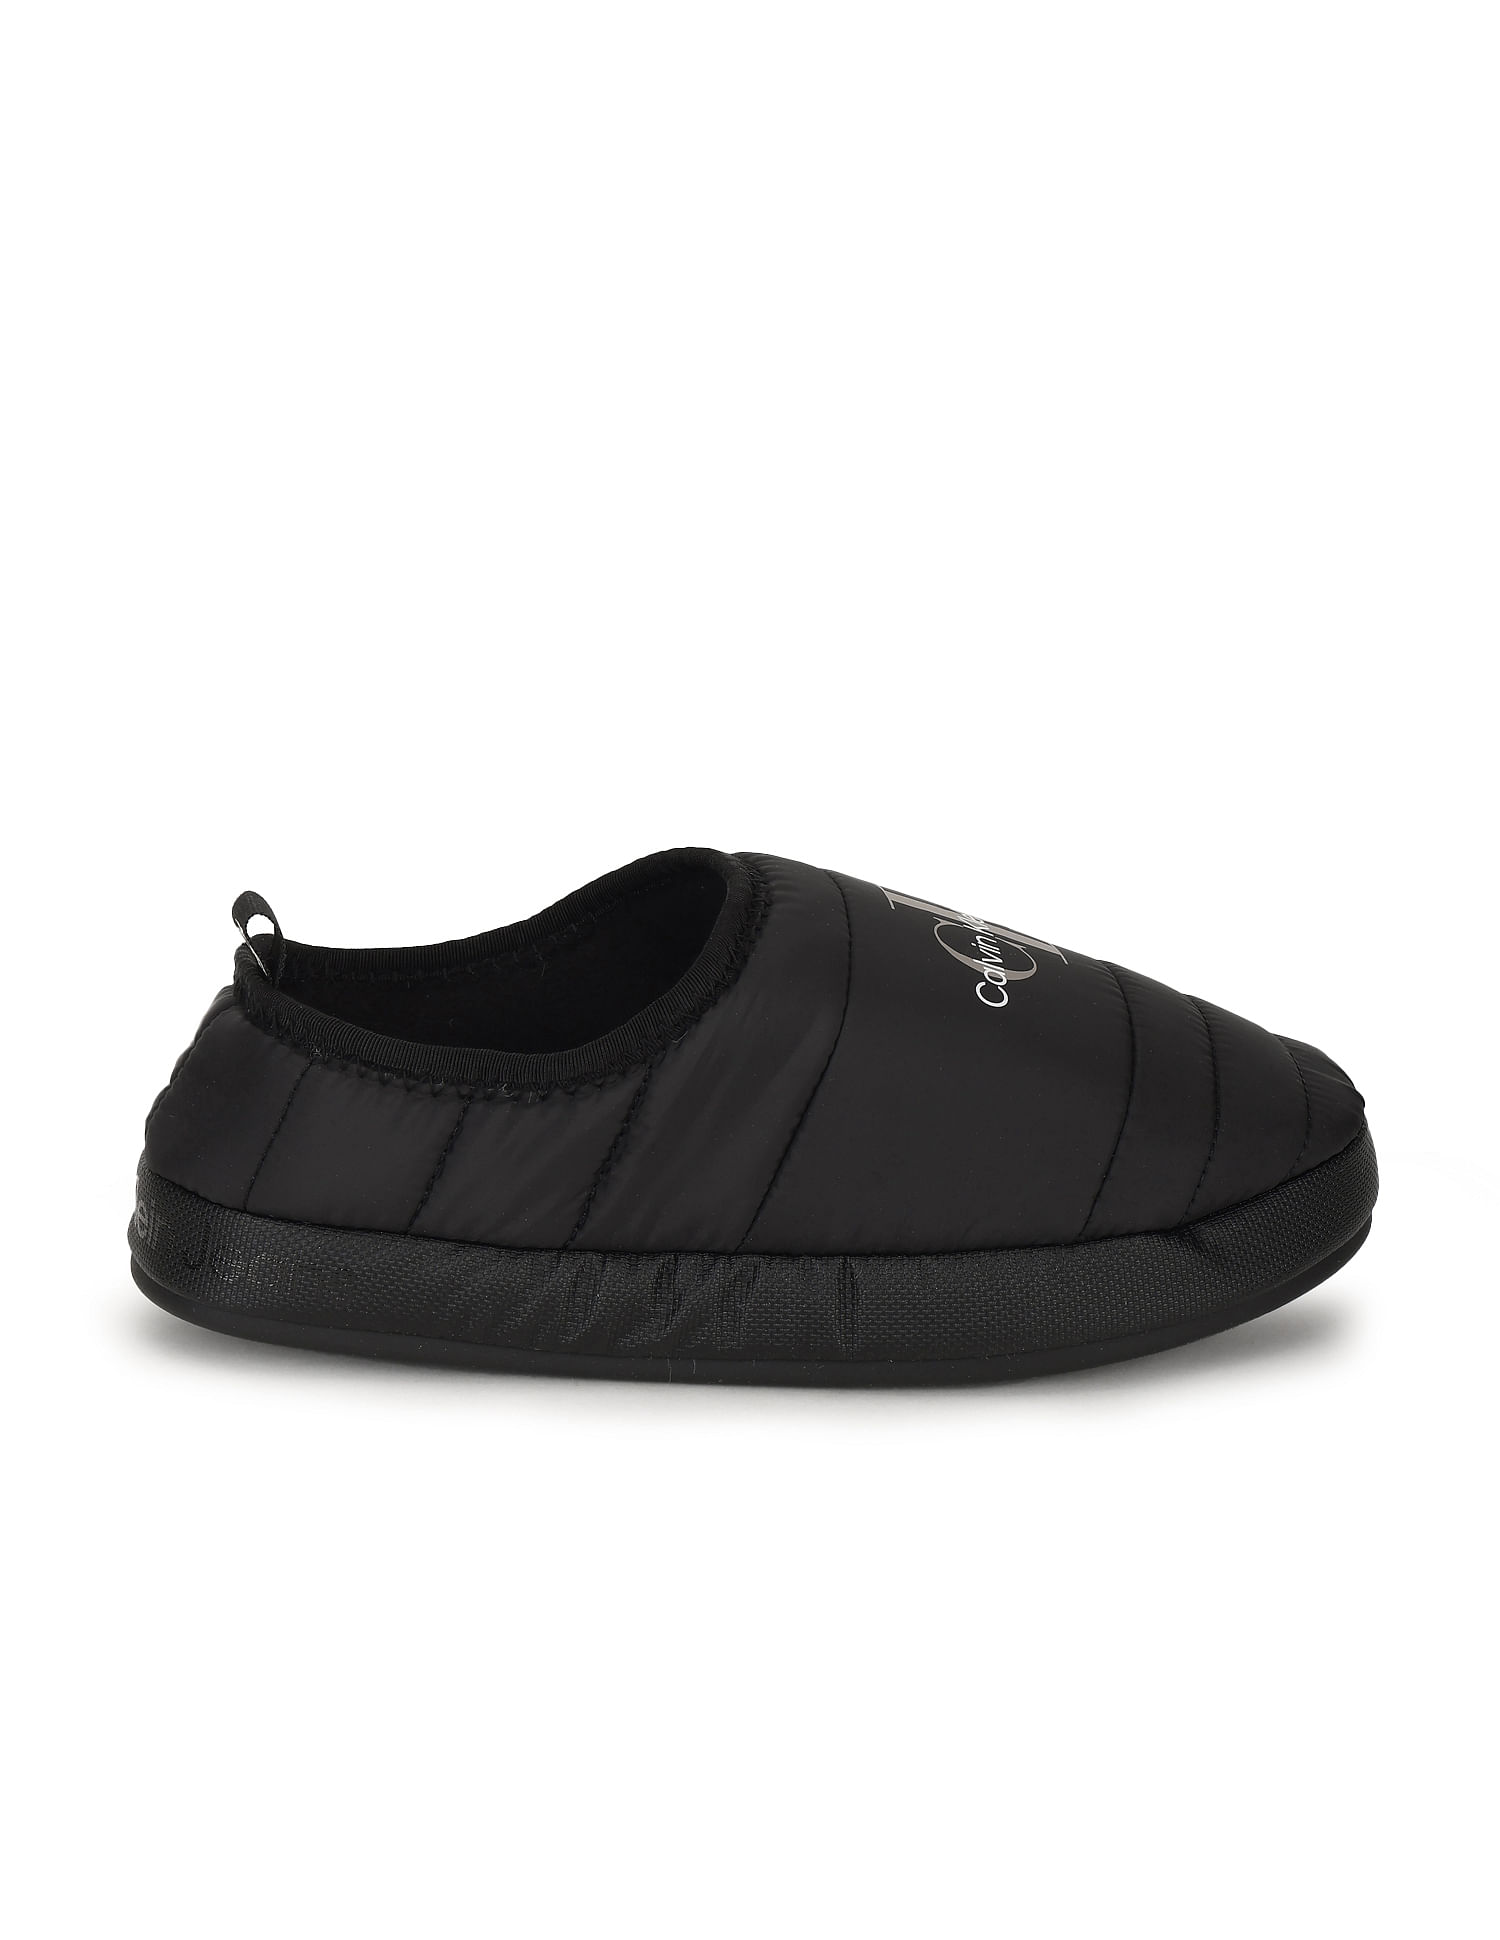 Sandals Calvin Klein Black size 42 EU in Rubber - 40744510